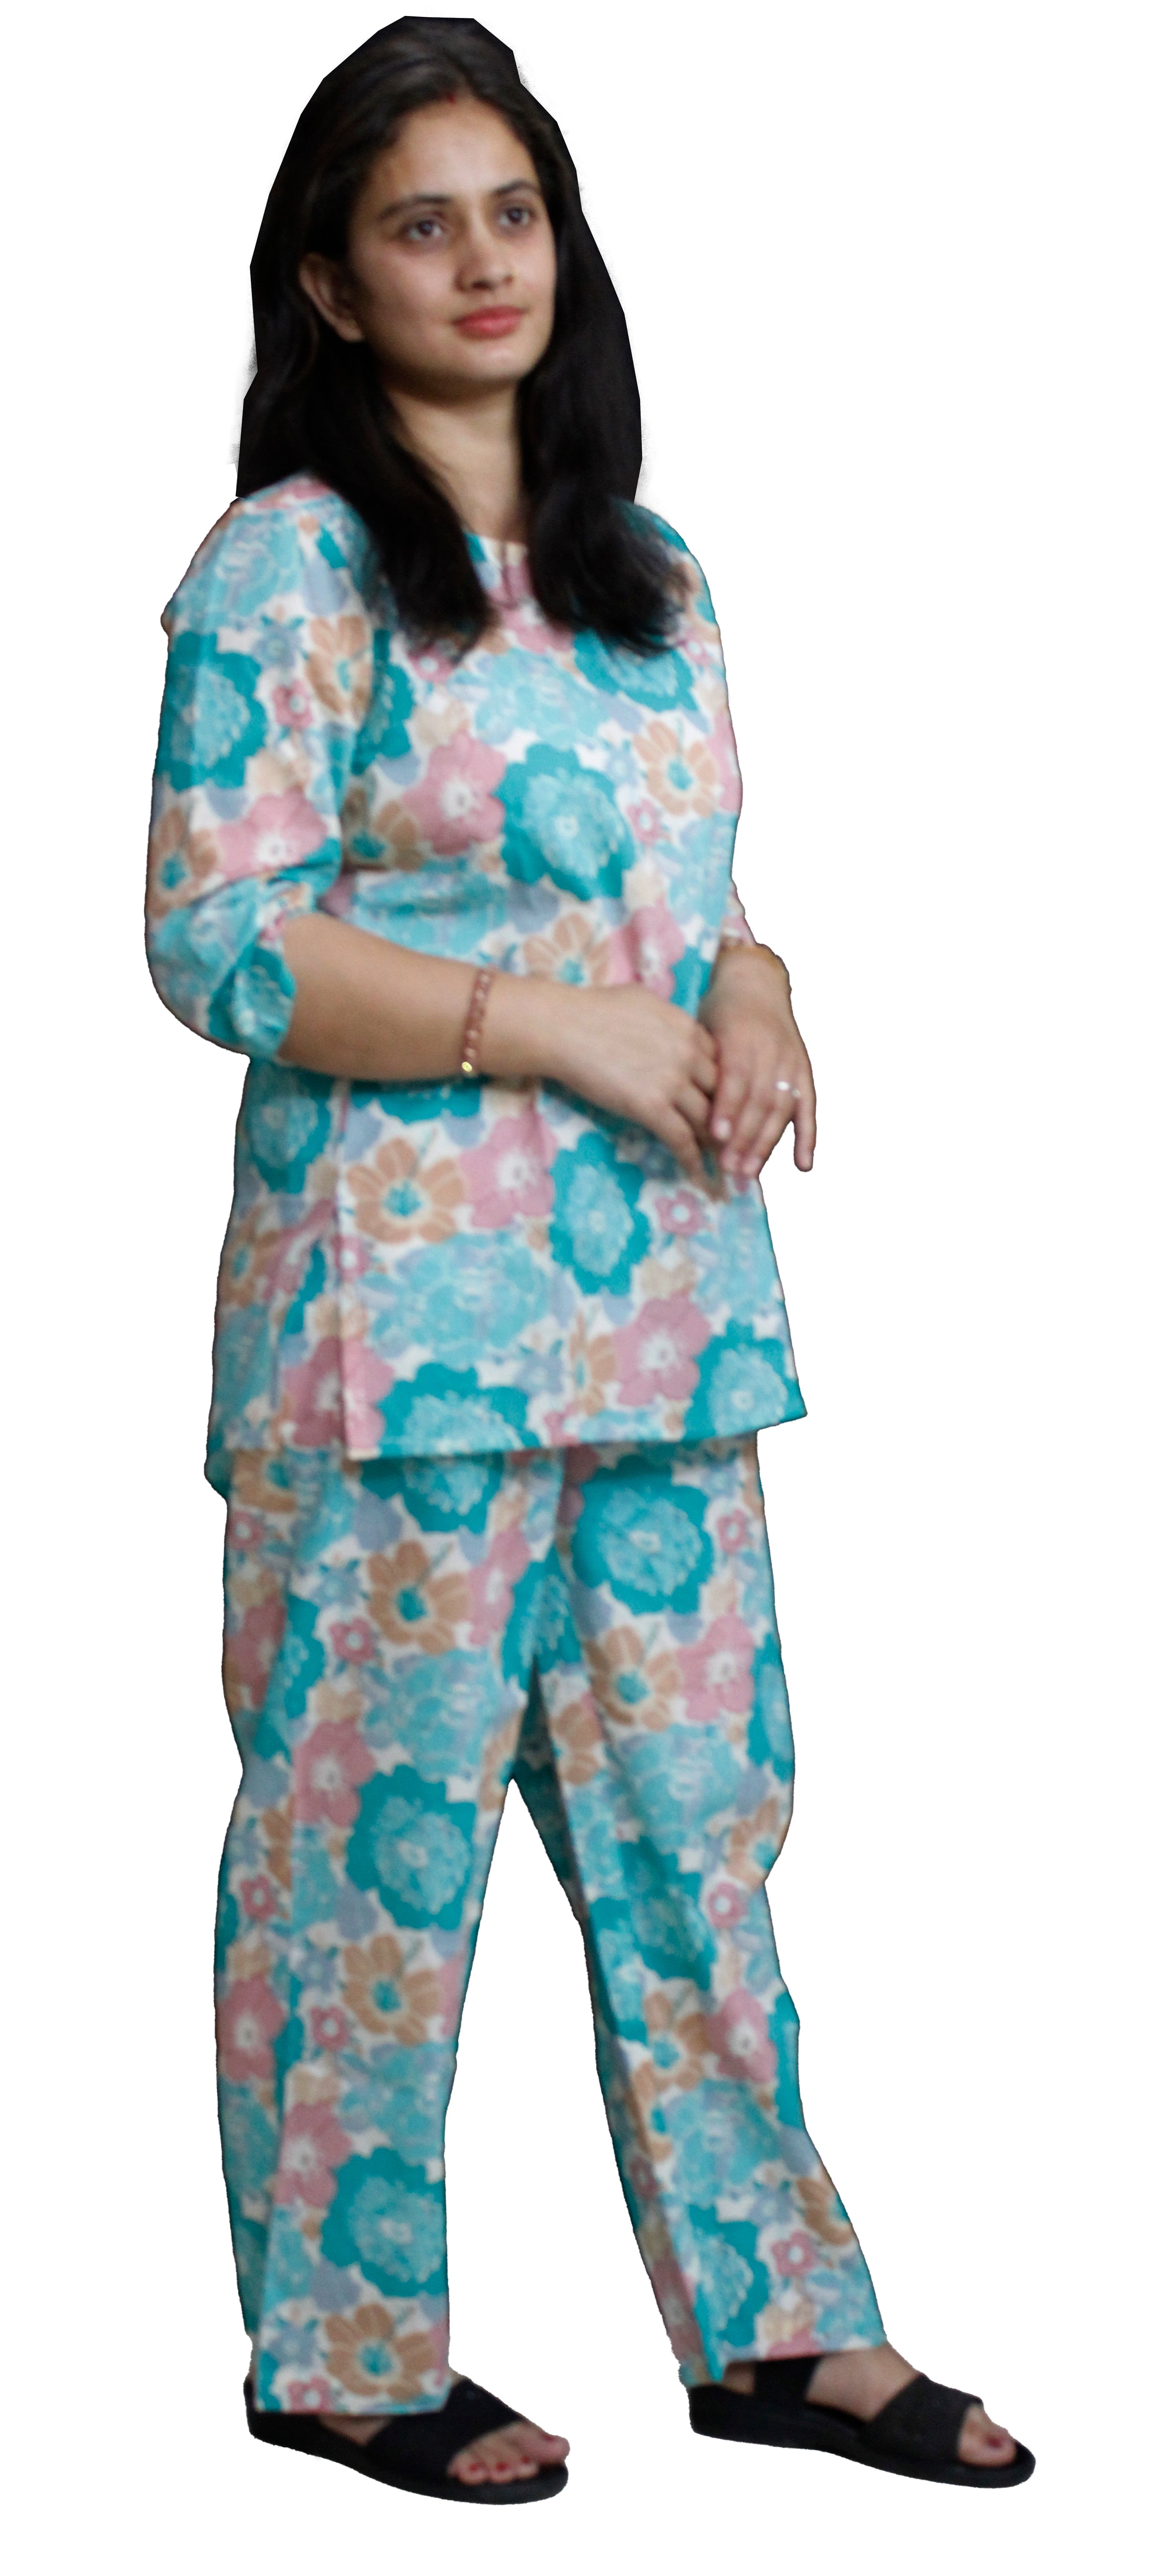 Aqua Floral Night Suit: Refreshing Elegance and Comfort